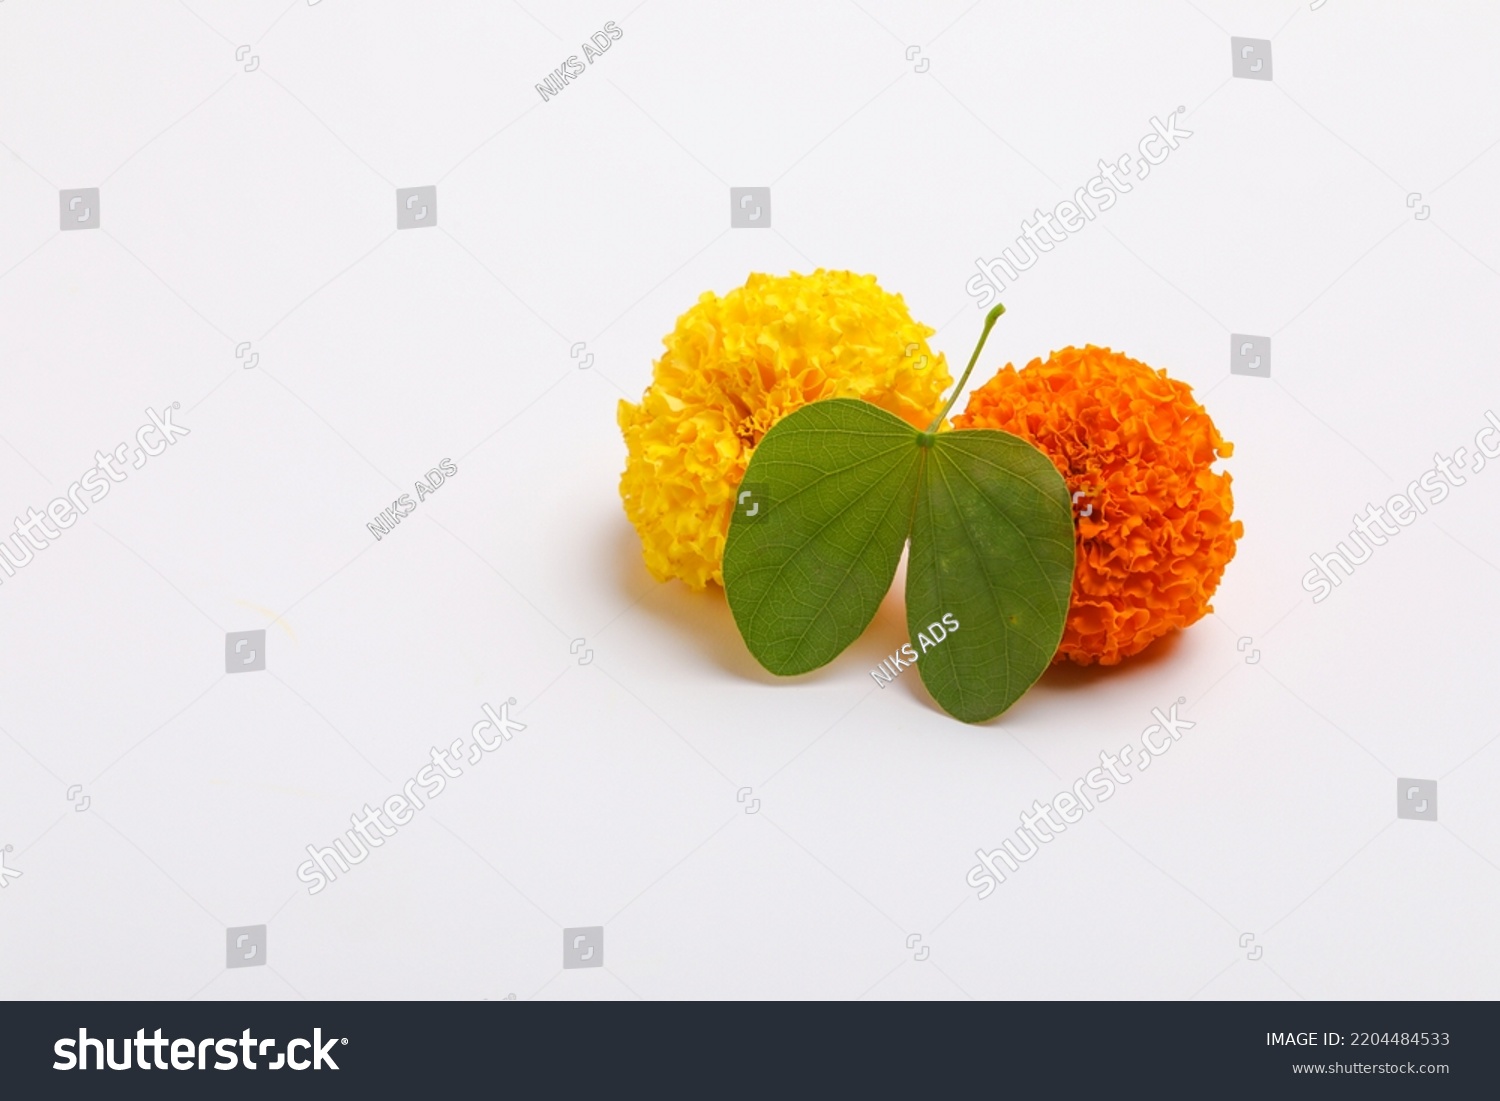 Indian Festival Dussehra, showing golden leaf (Piliostigma racemosum) and marigold flowers on white background. #2204484533